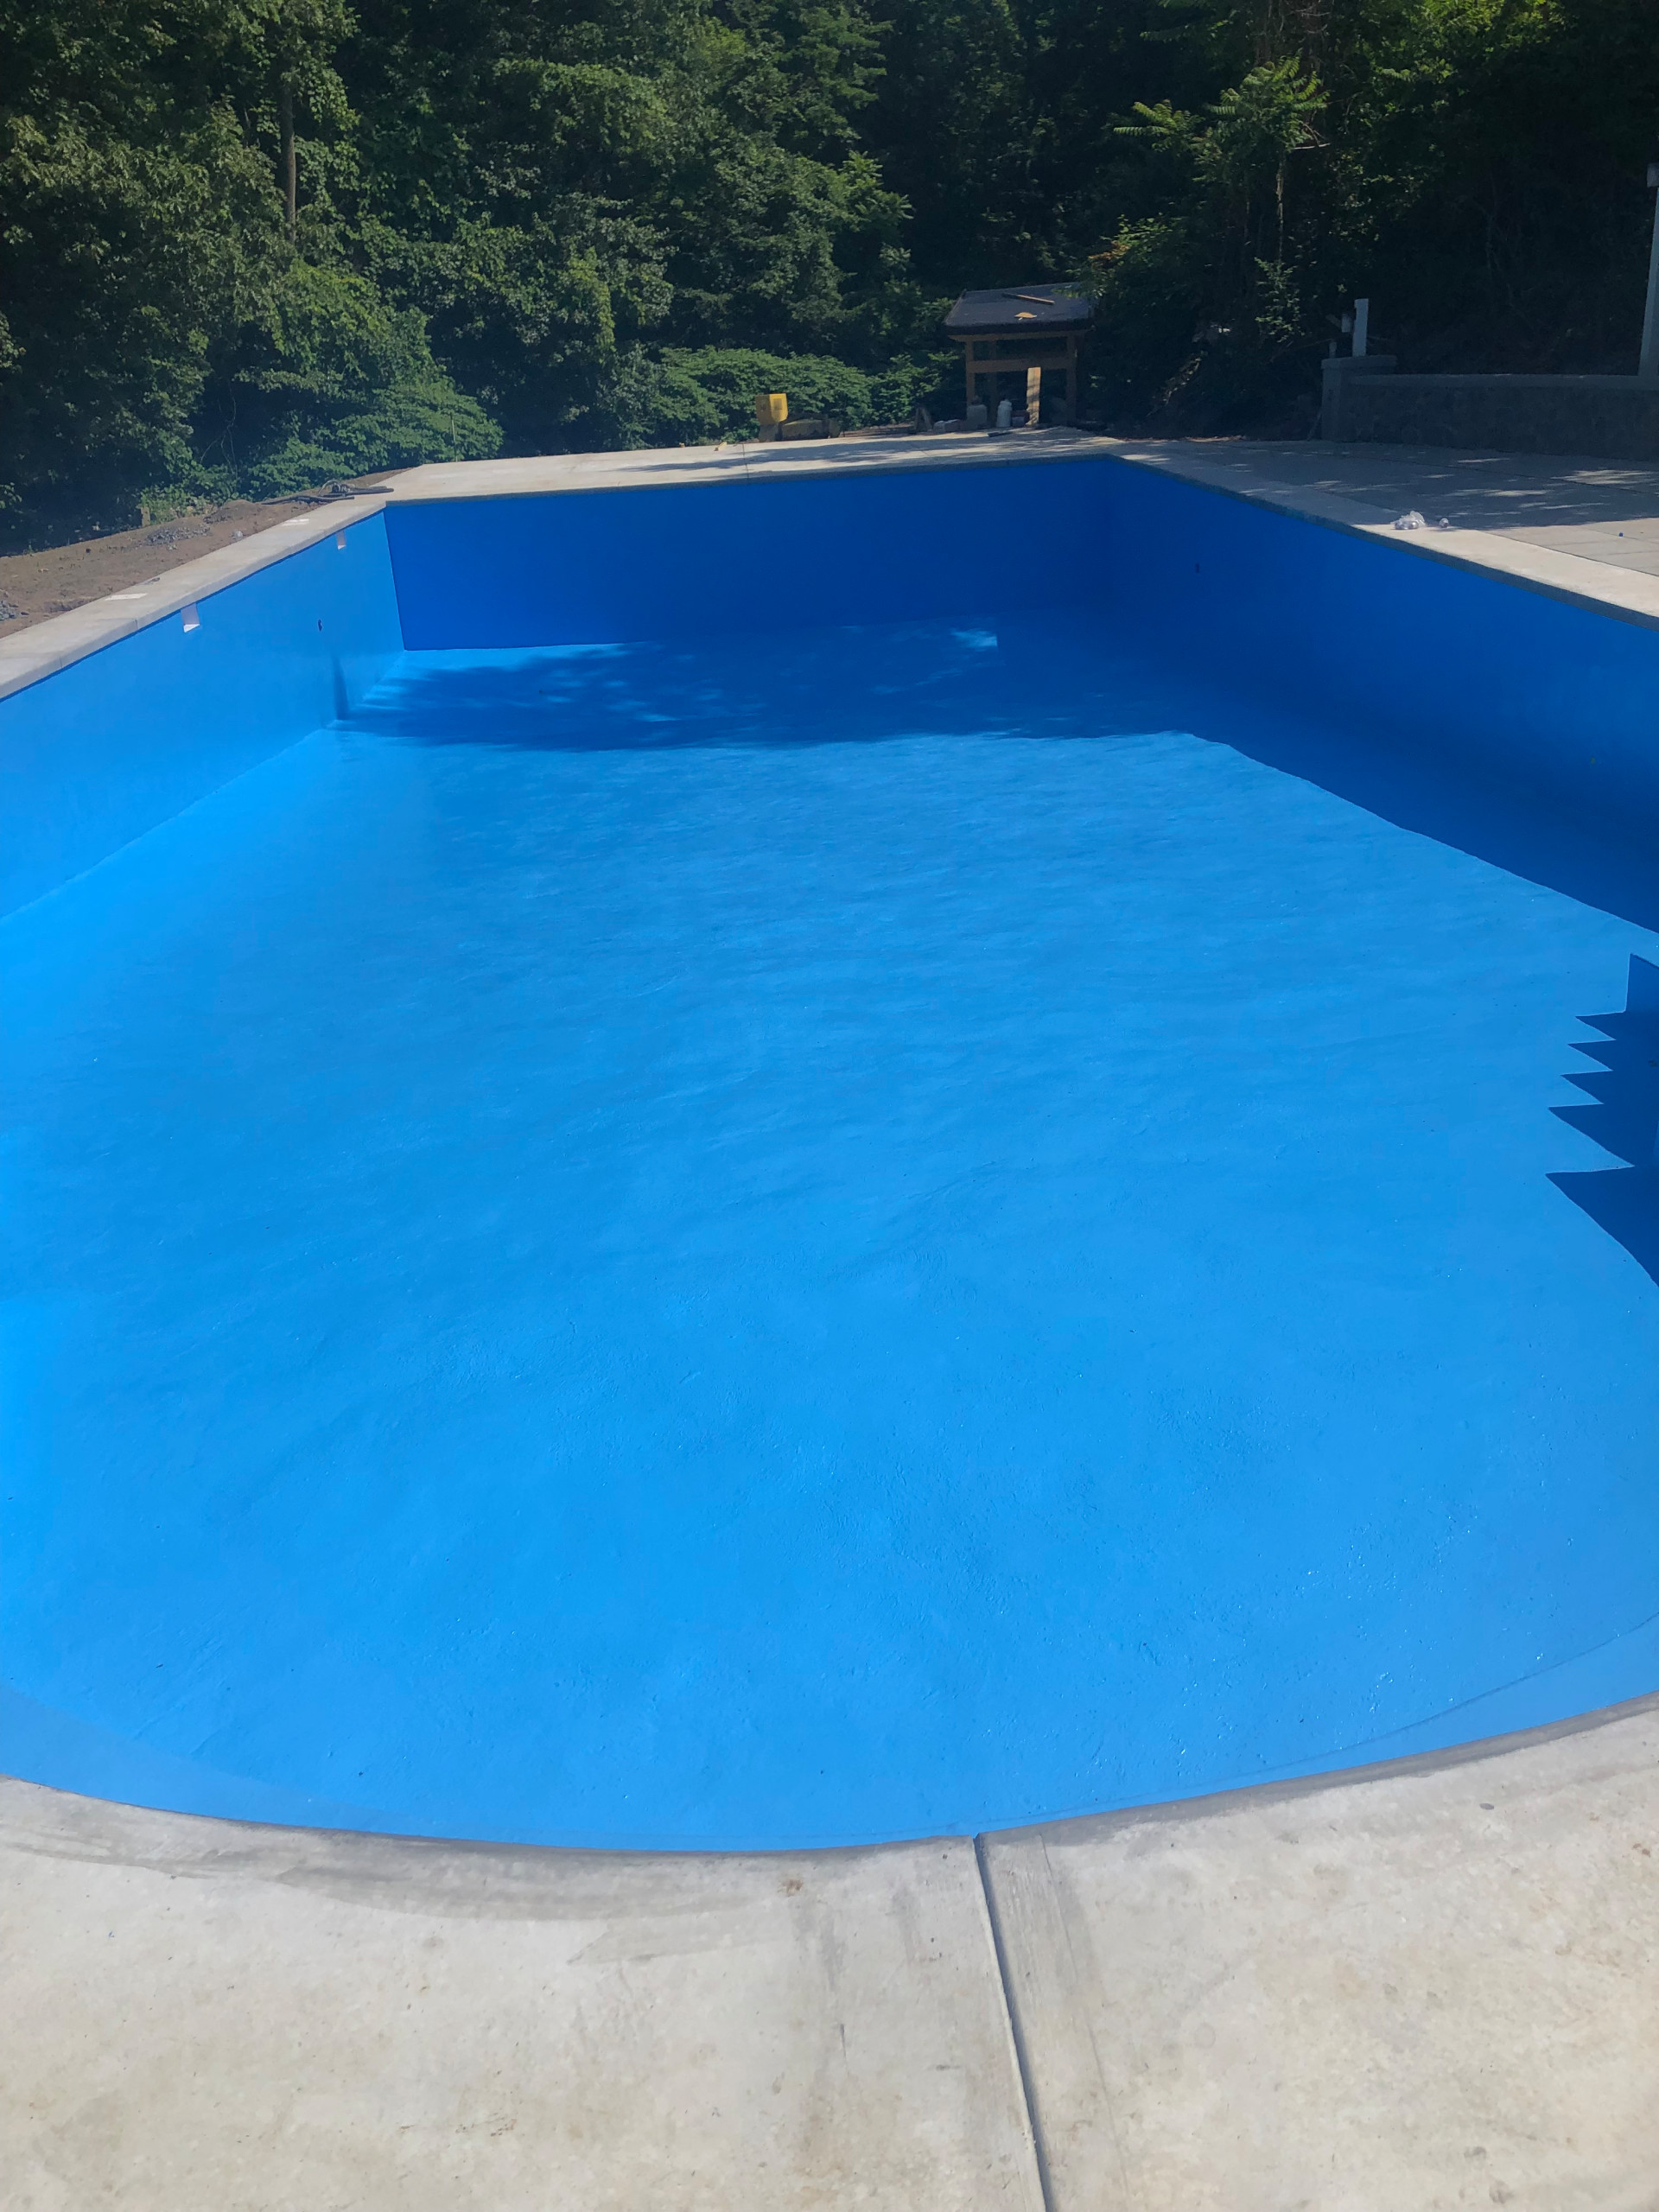 Restoration Pool - Part 2